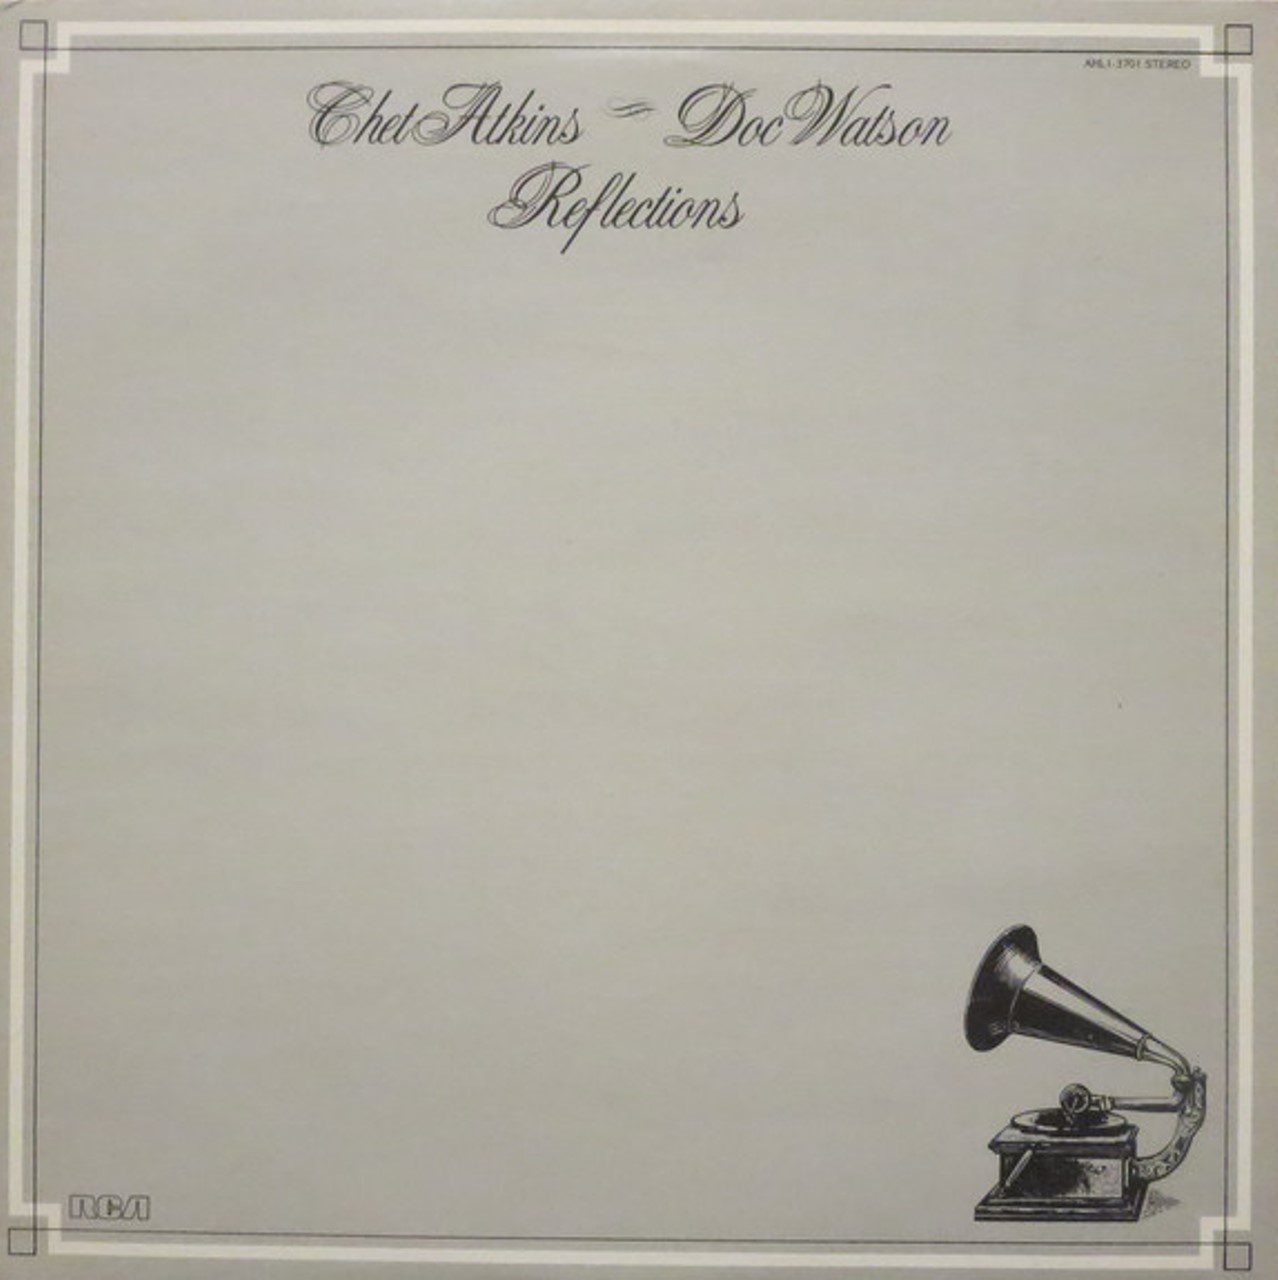 Chet Atkins & Doc Watson – Reflections cover album